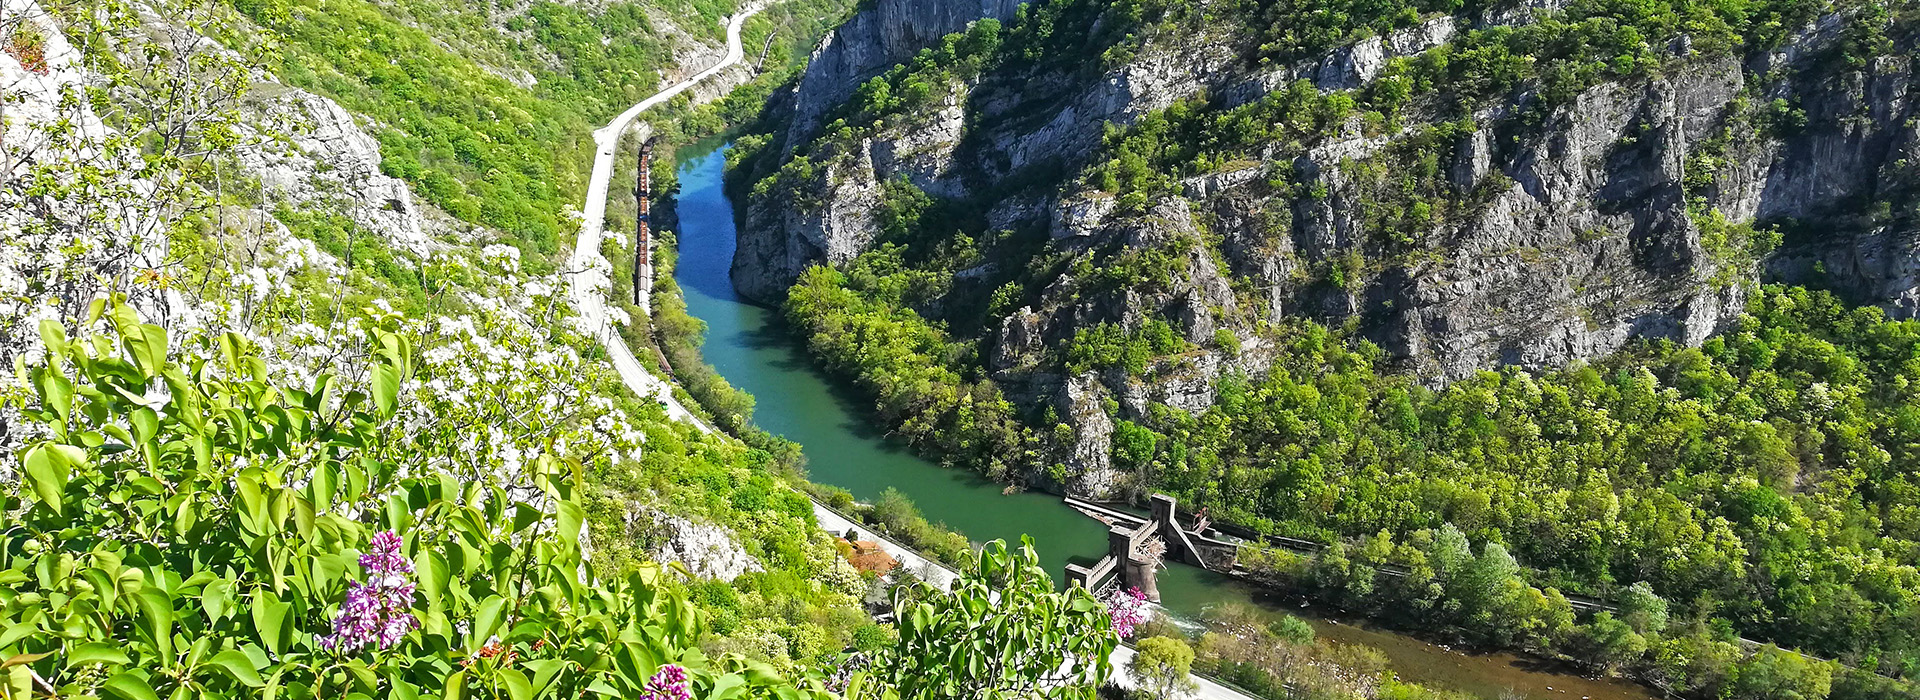 Walking Serbia guided holiday - Sićevo gorge